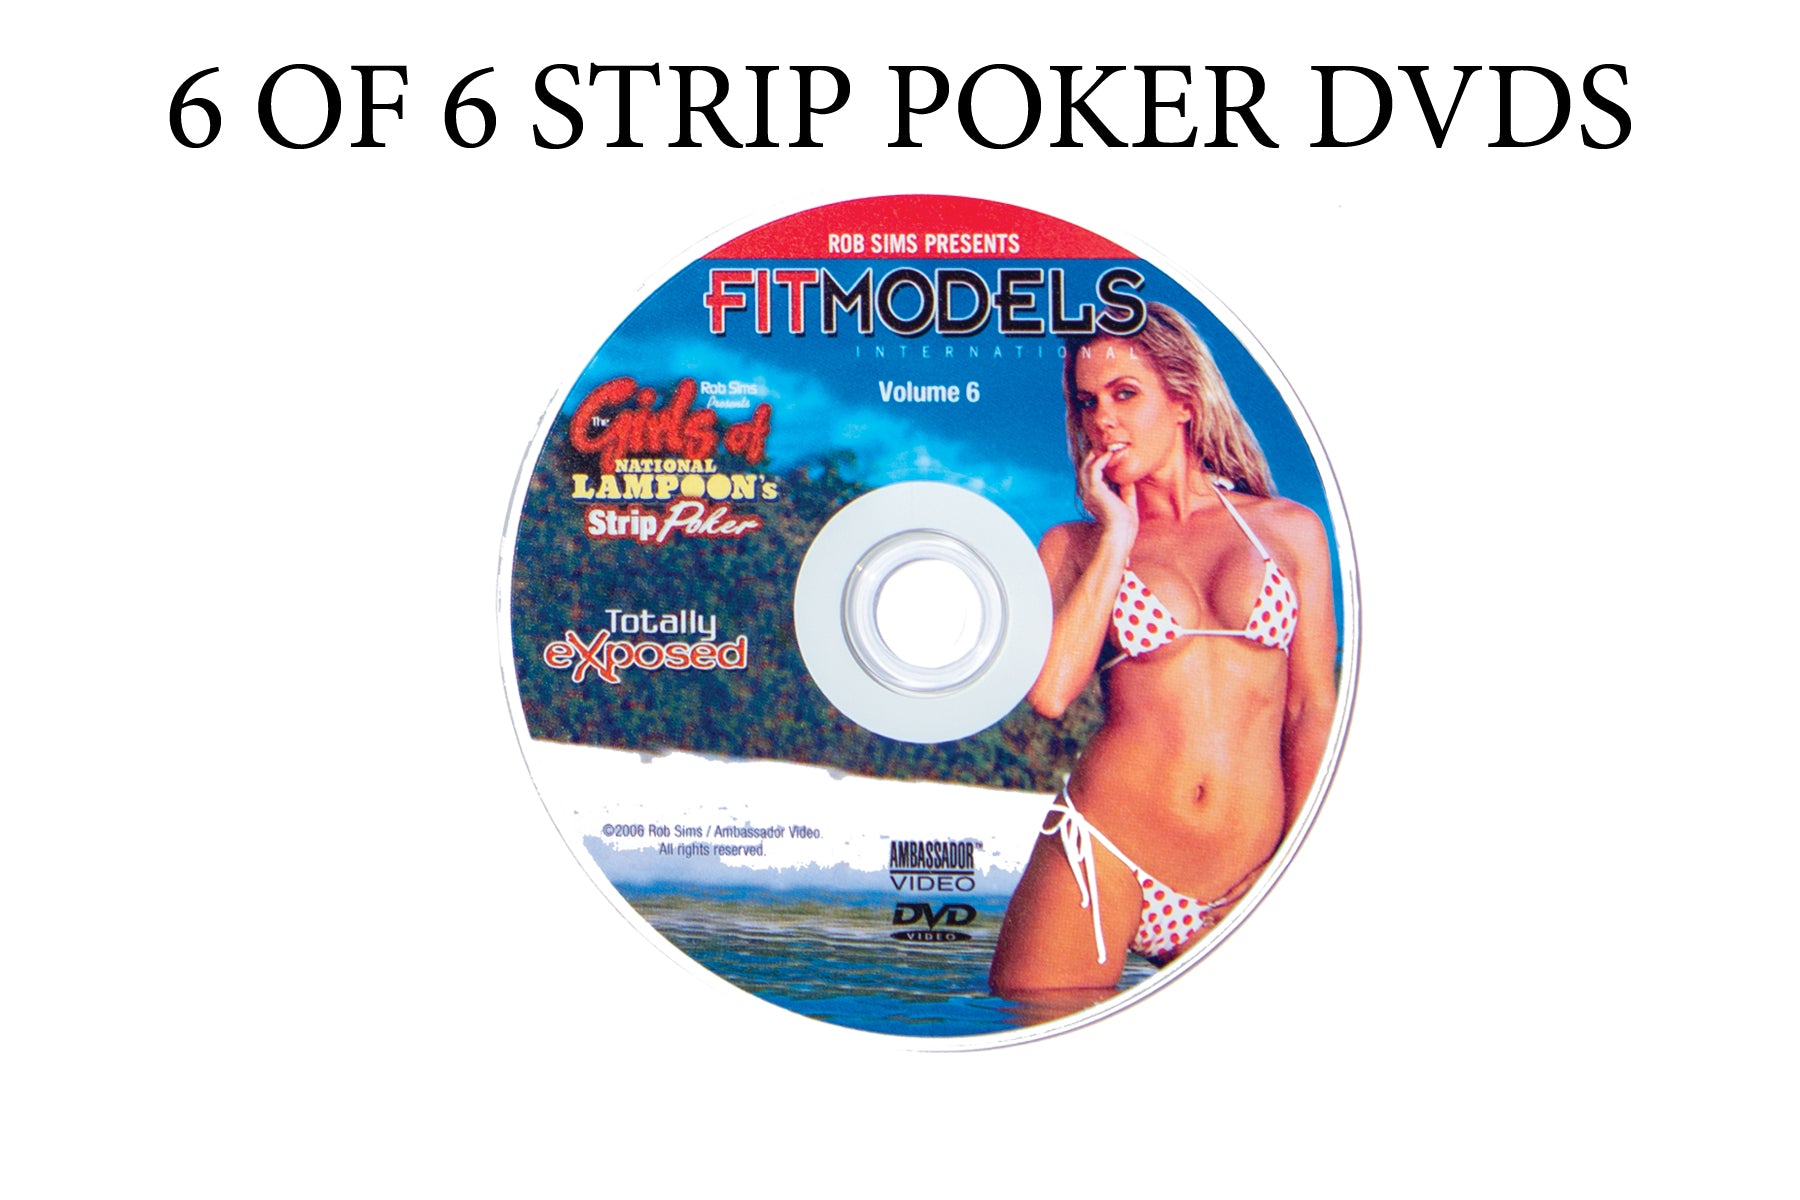 National Strip Poker Series 6 DVDs t buy any single DVD